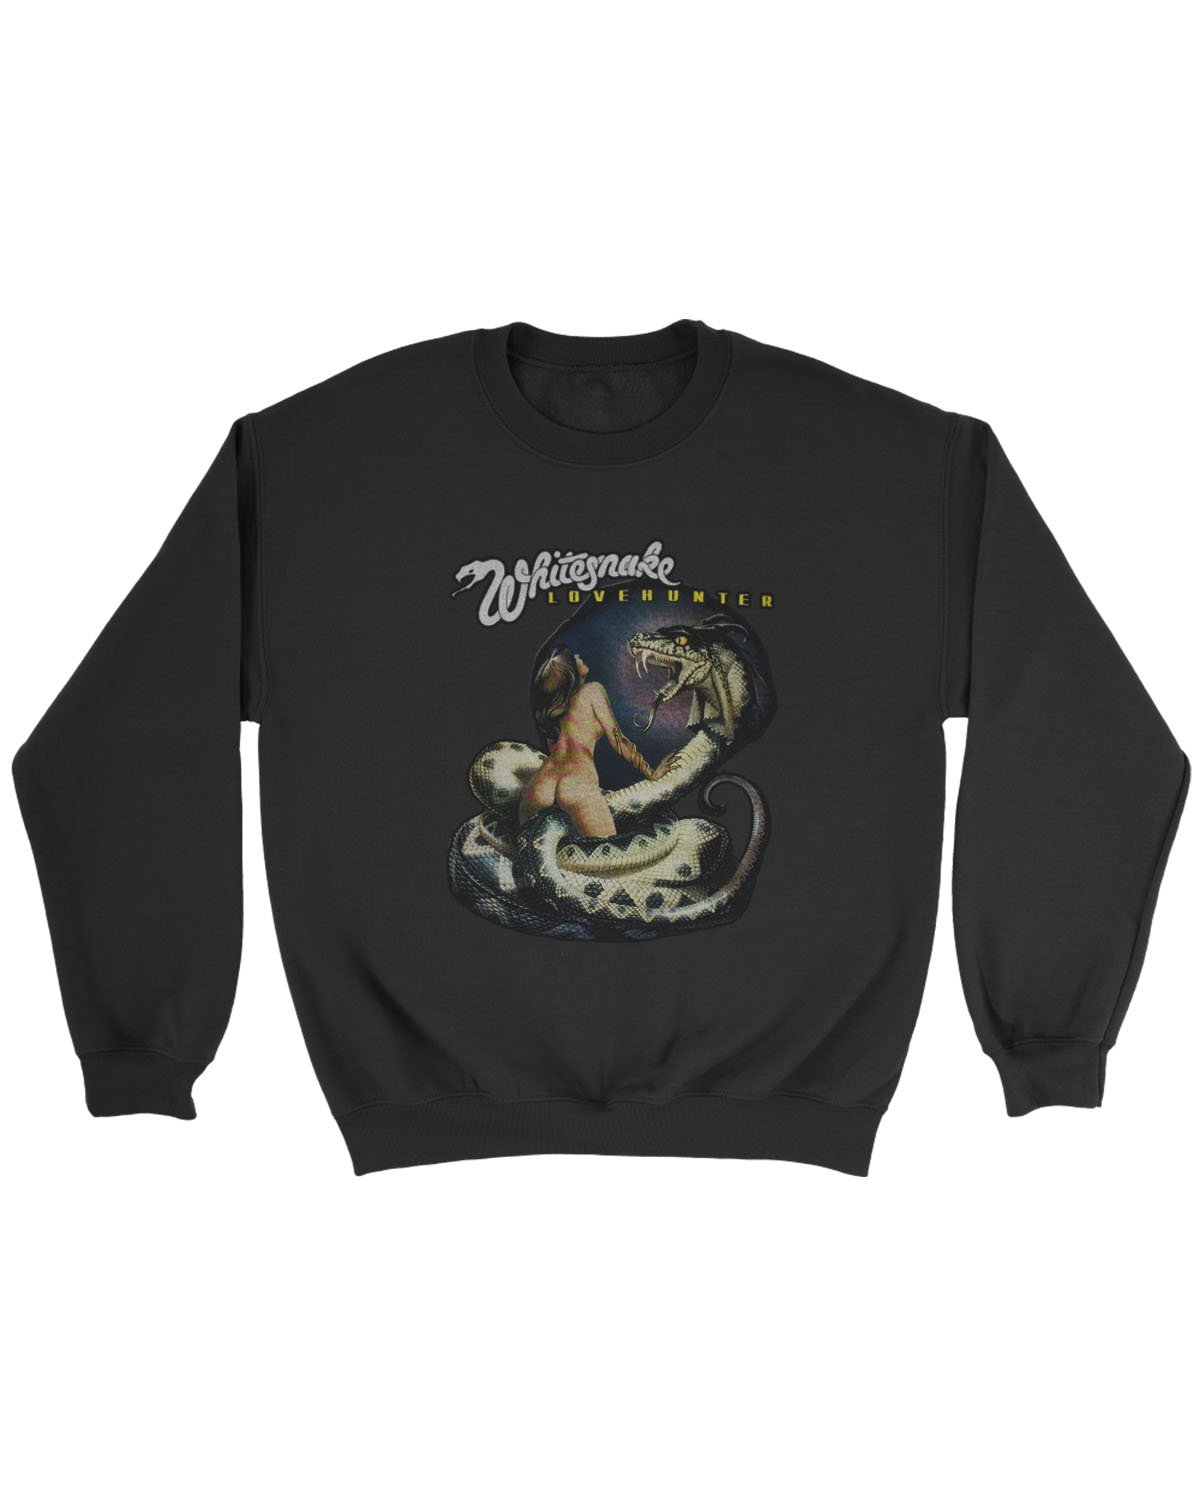 Whitesnake Lovehunter Sweatshirt